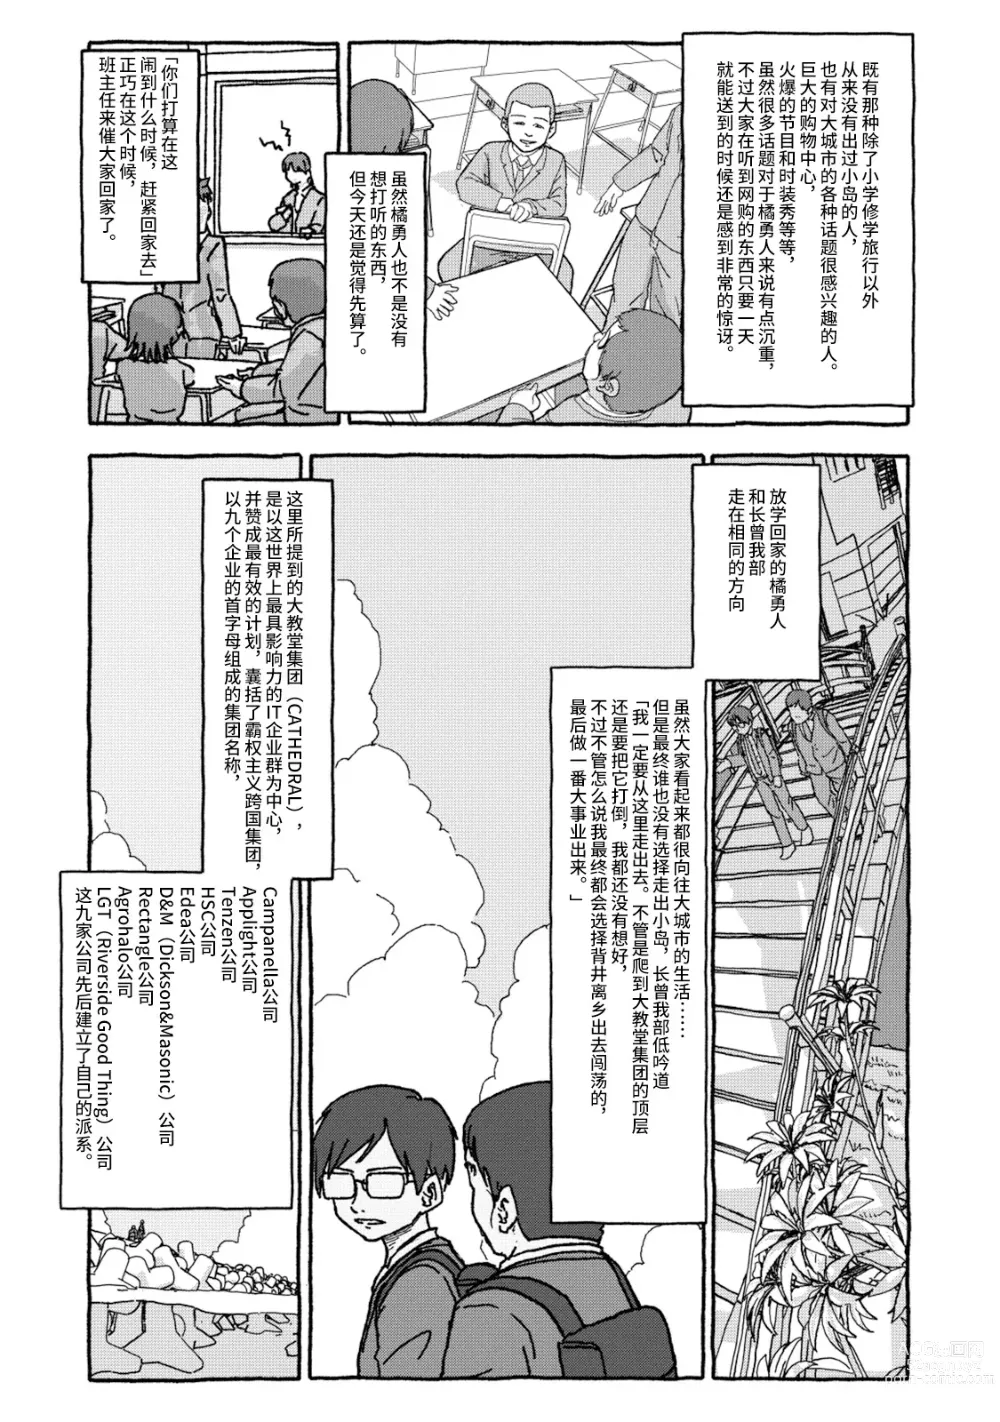 Page 24 of doujinshi 相遇四光年后合体 前篇